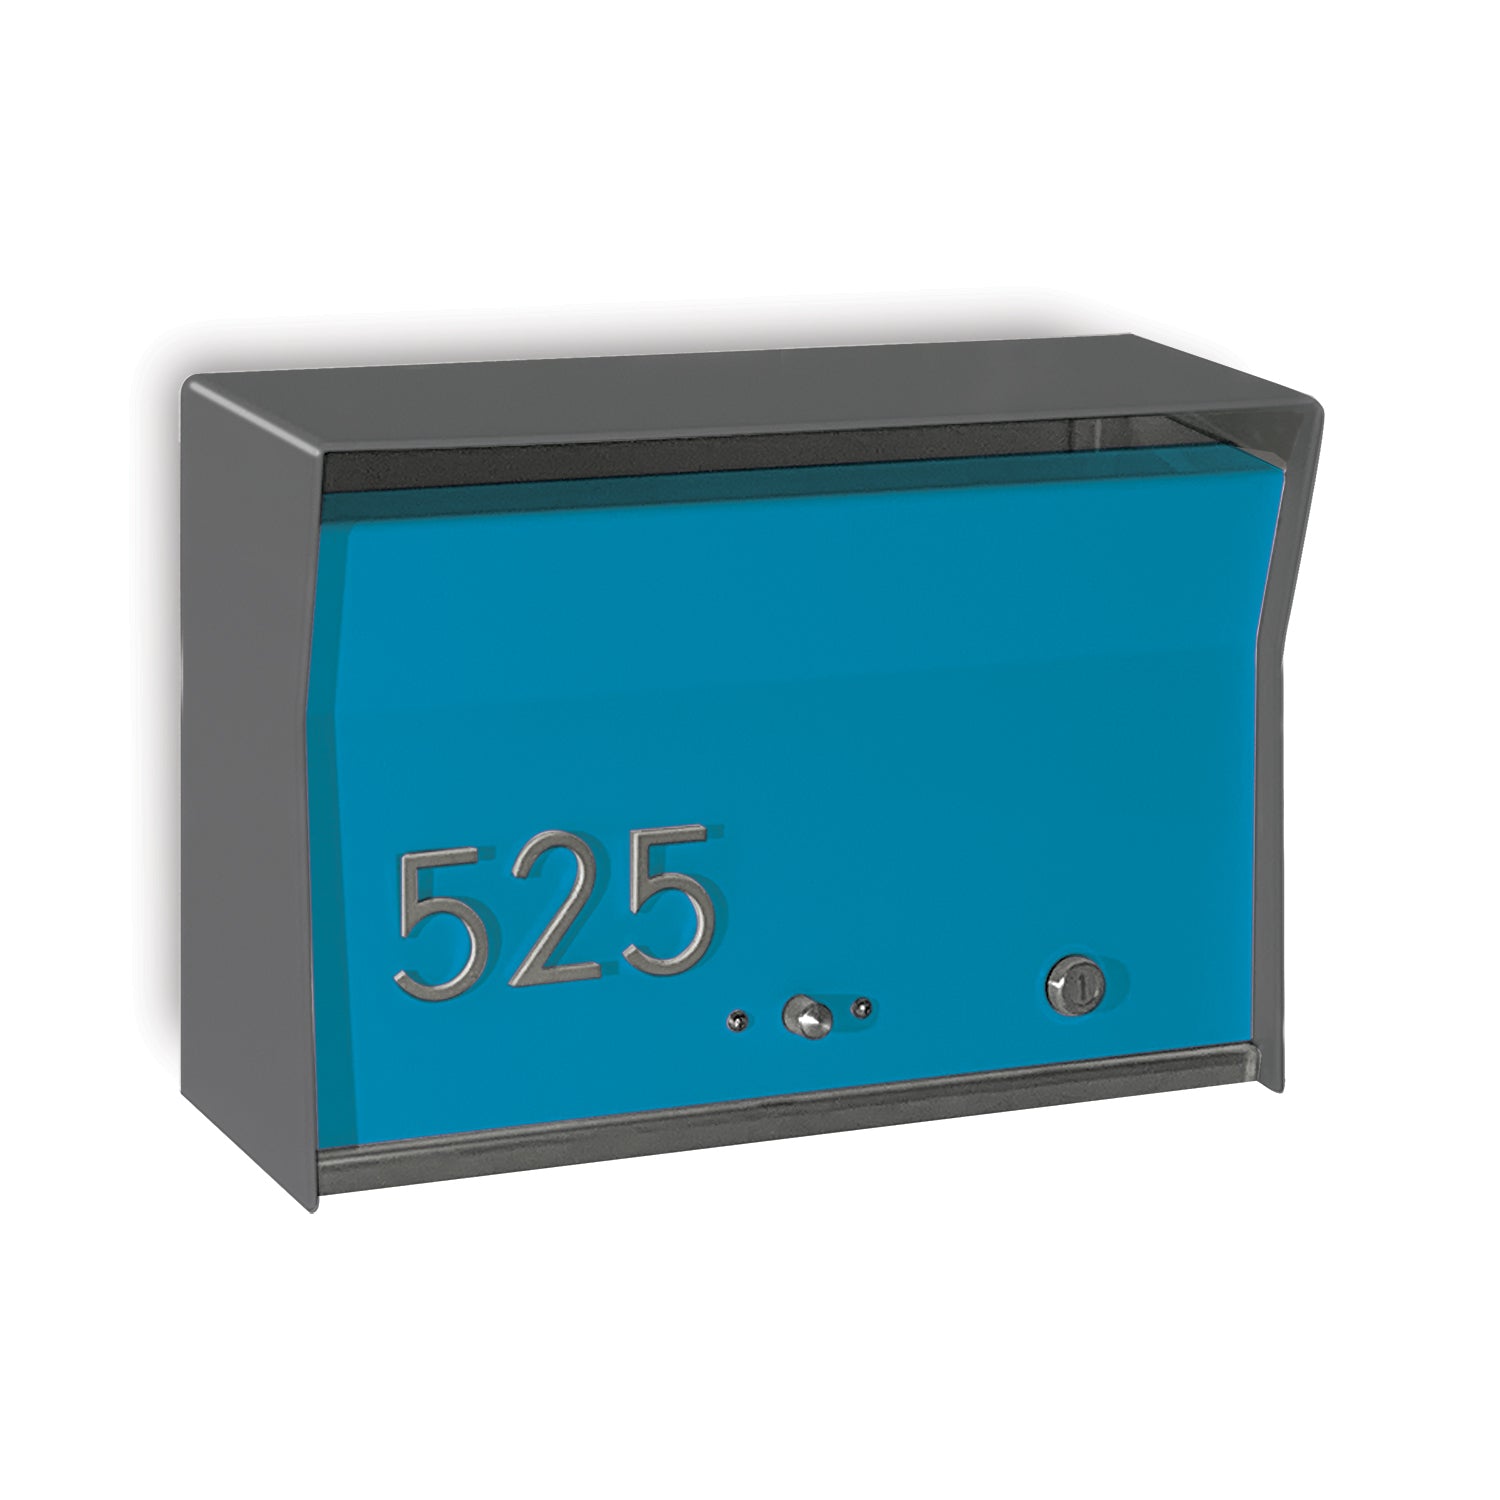 RetroBox Locking Wall Mount Mailbox in designer grey and aqua